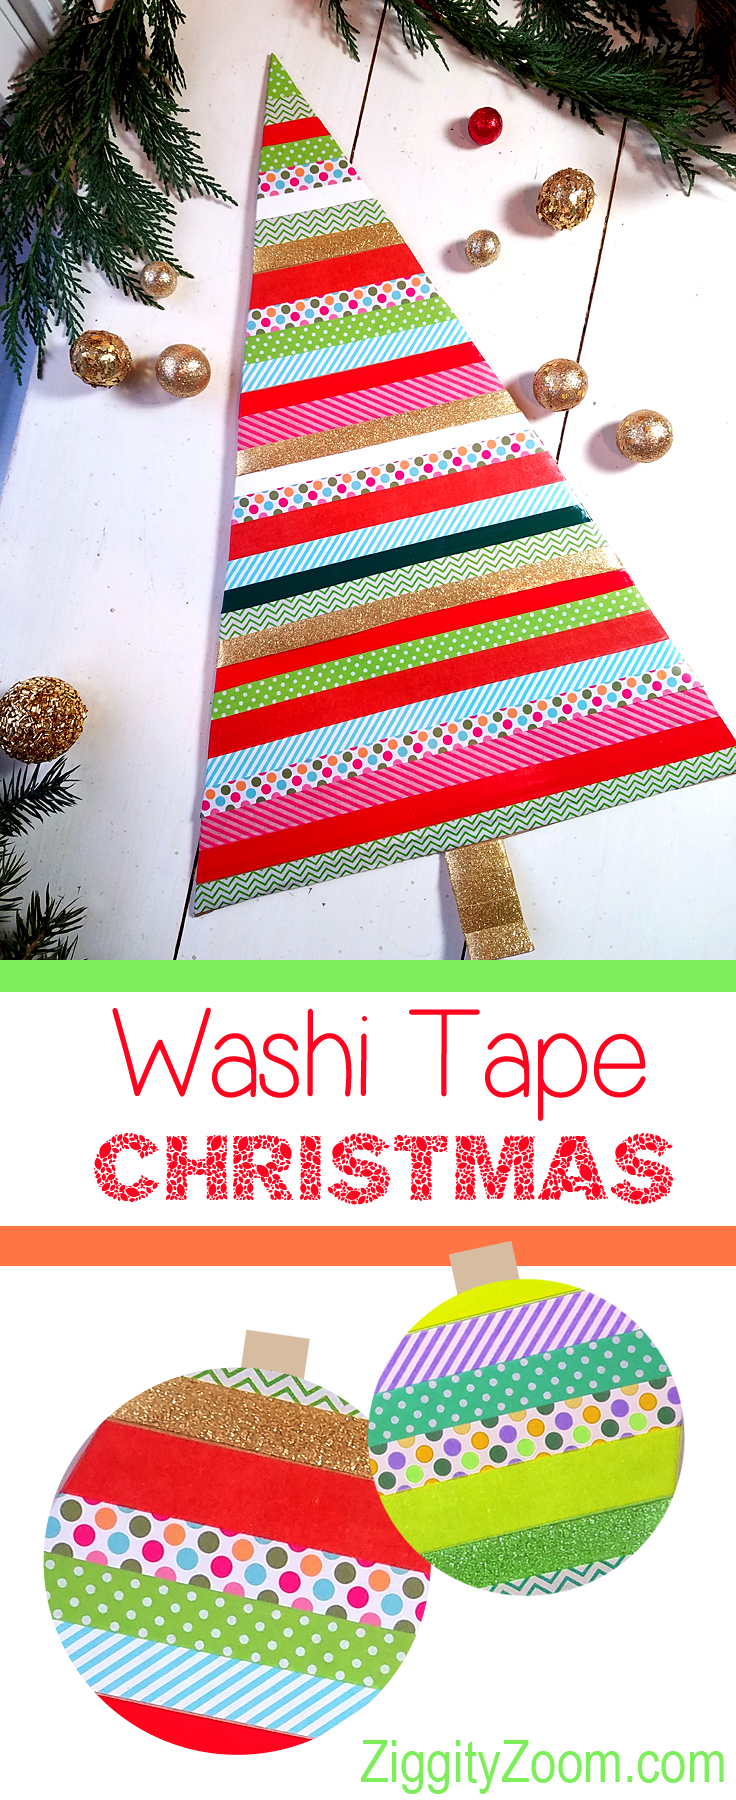 Washi tape Christmas crafts - Chickabug